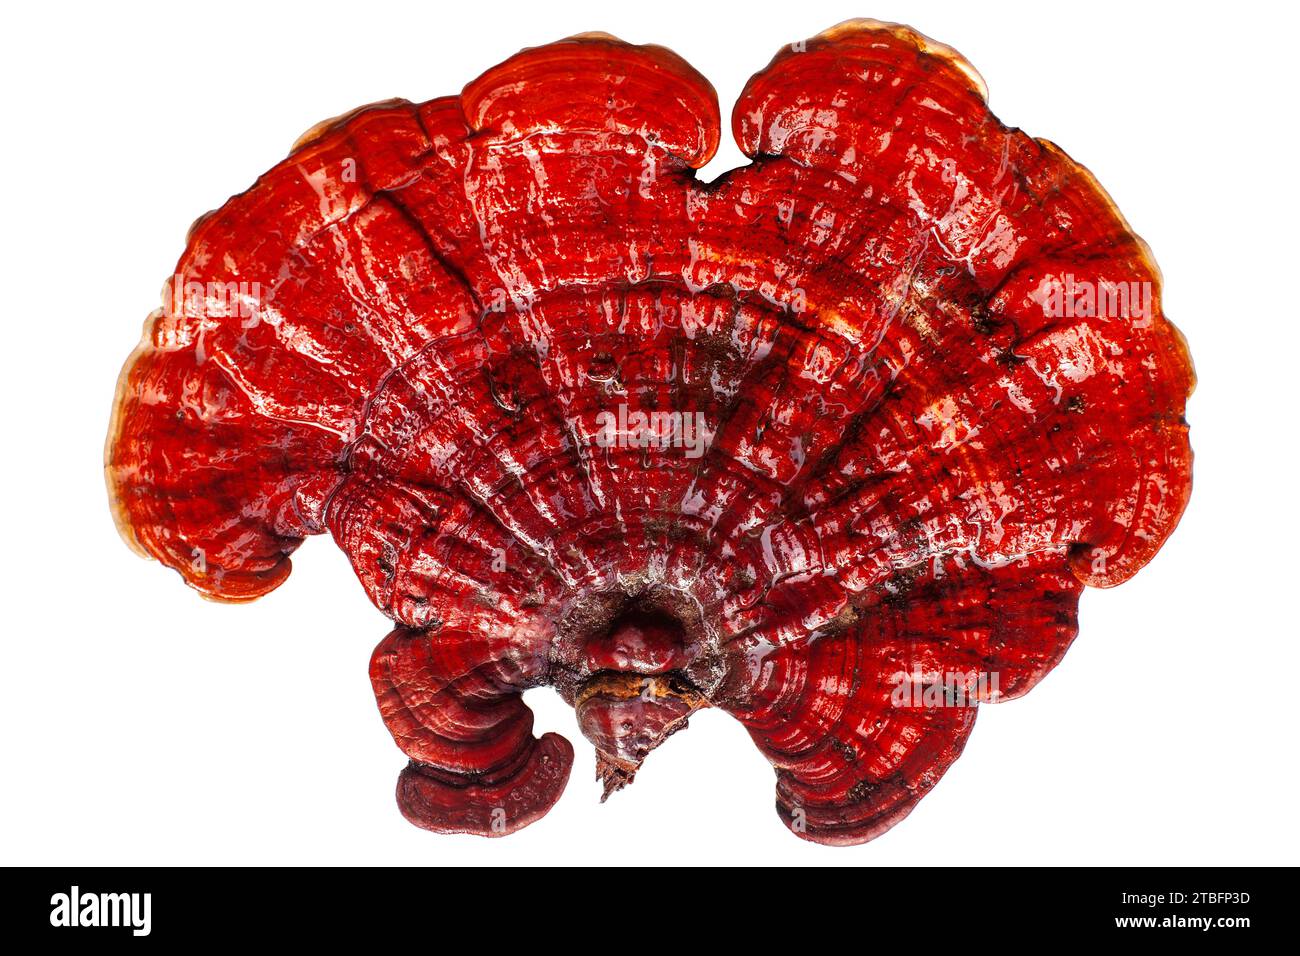 Roter Reishi-Pilz auf weißem Hintergrund isolierte Nahaufnahme, Lingzhi-Pilz, Ganoderma lucidum, lackierter Pilz, medizinischer Pilz Stockfoto